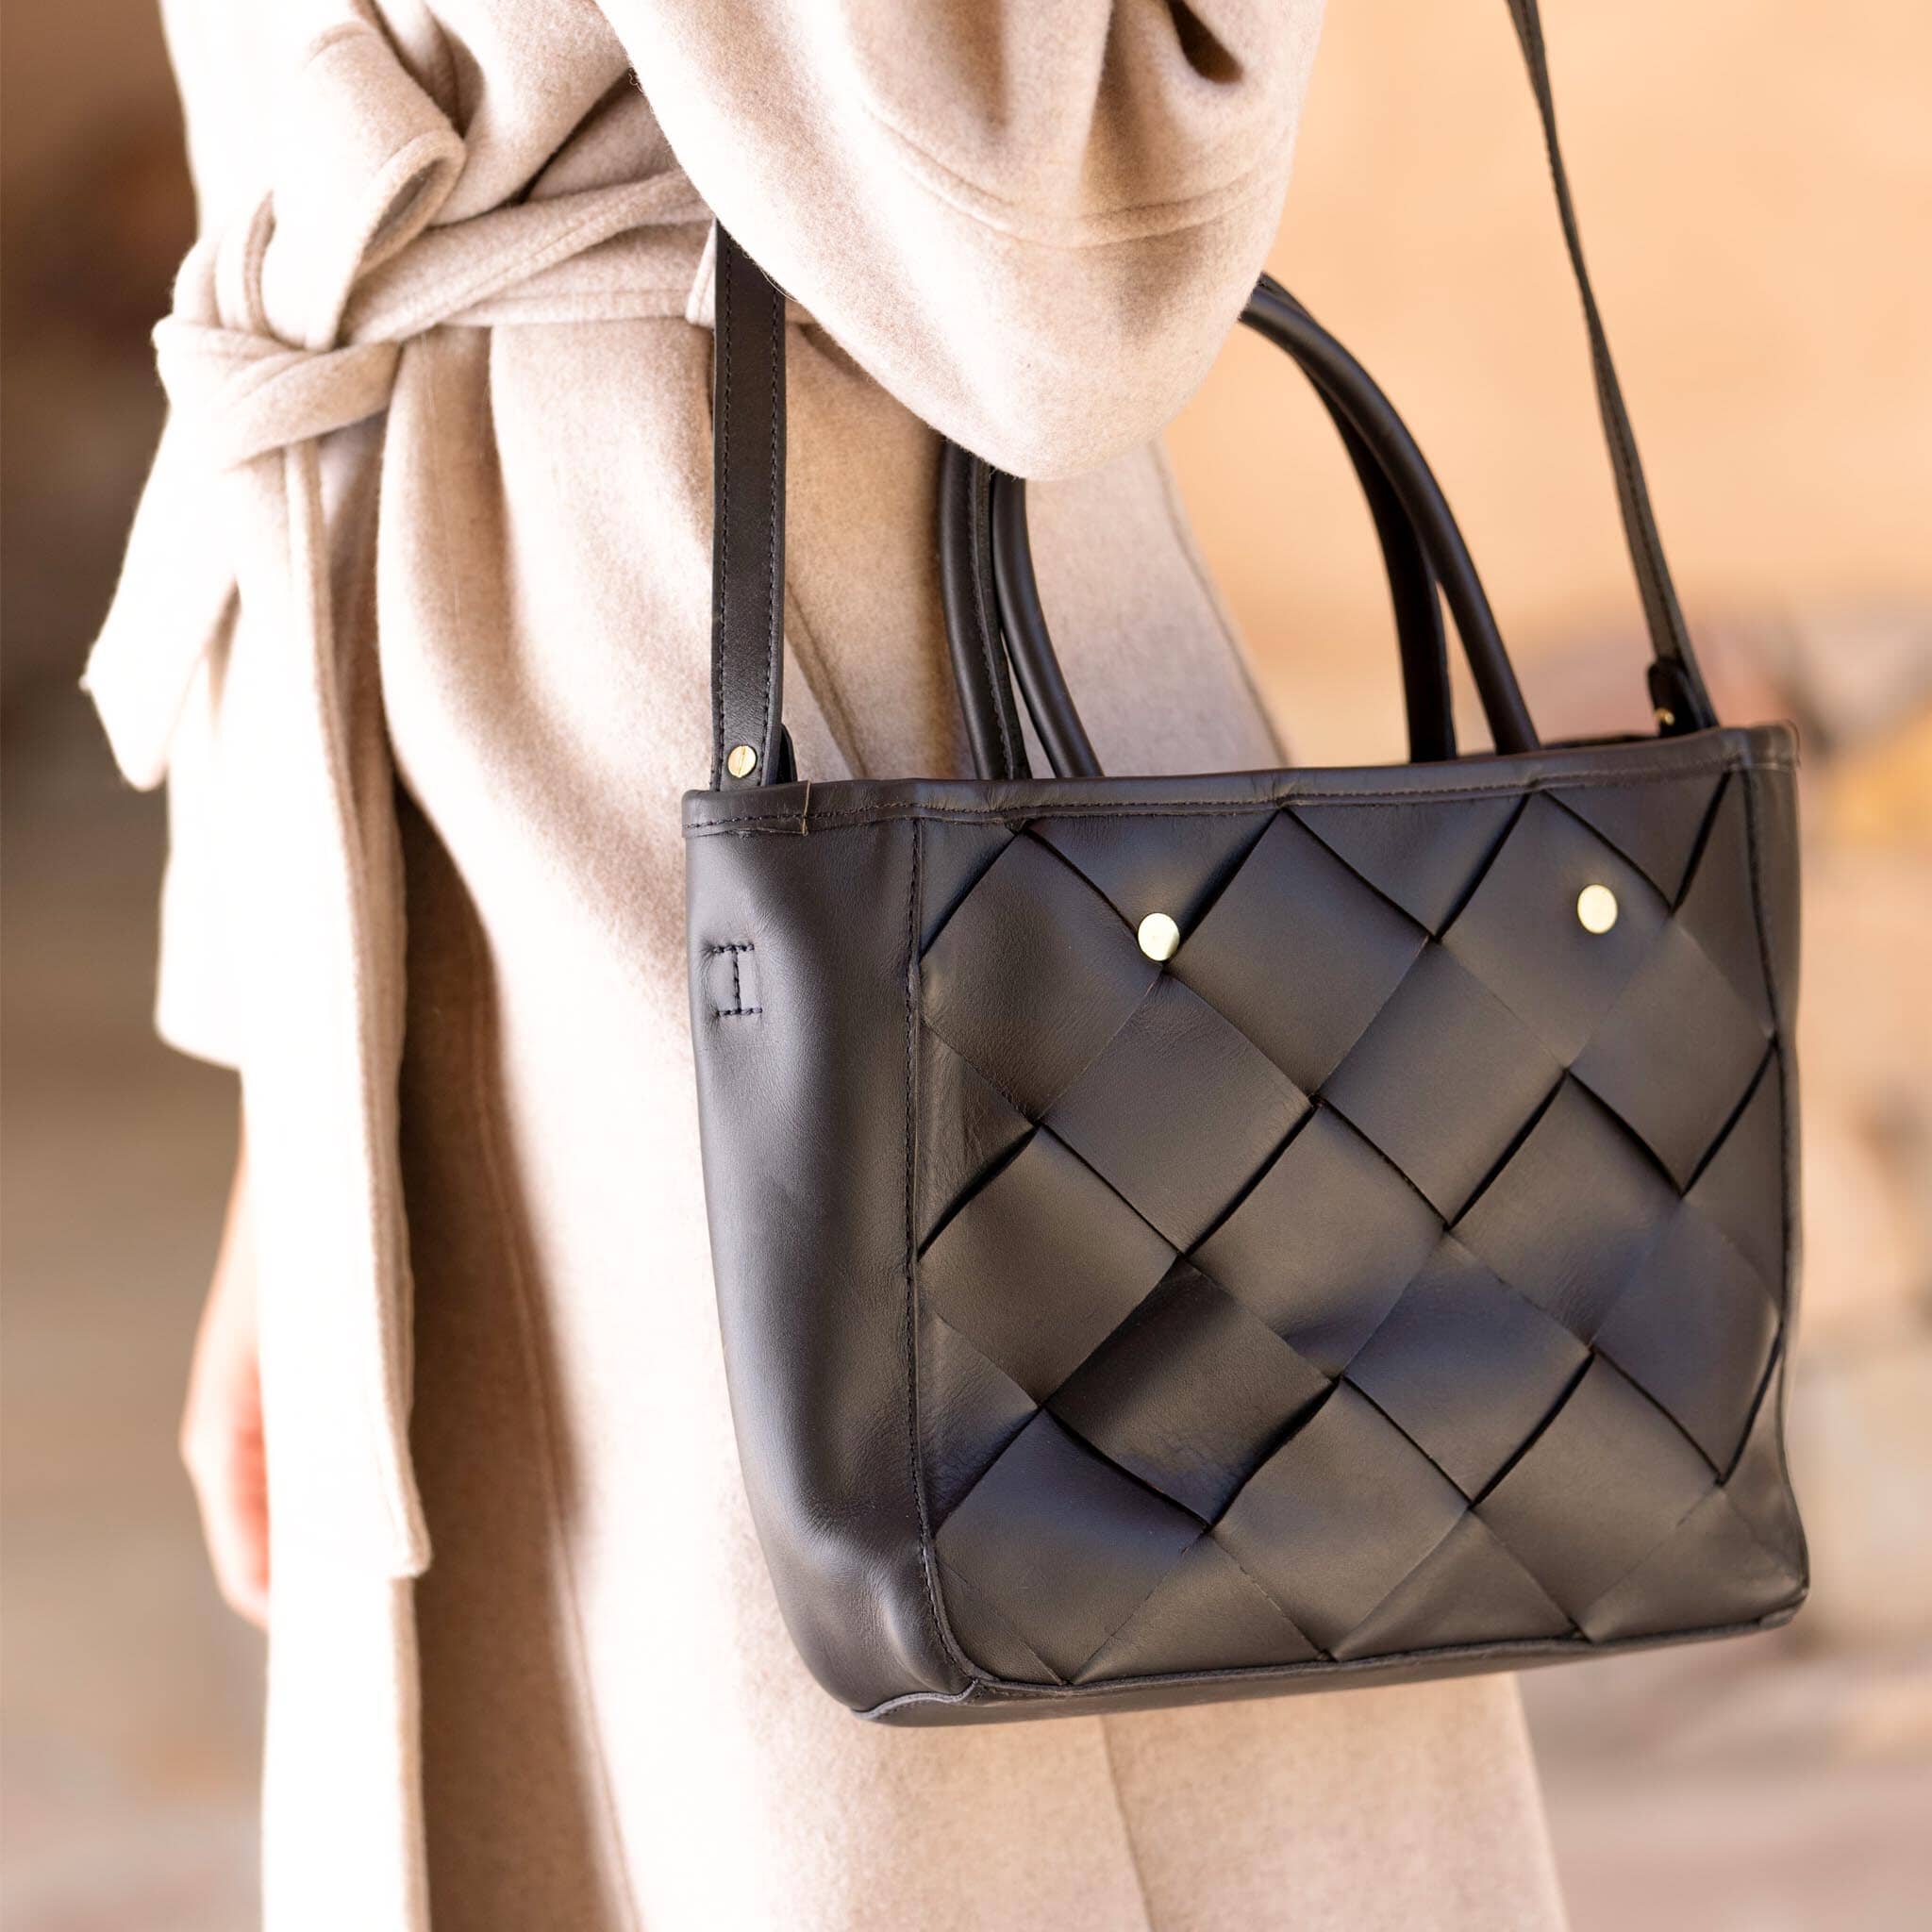 Carry-All Handwoven Satchel Black Leather Handbag - unlined Nisolo 